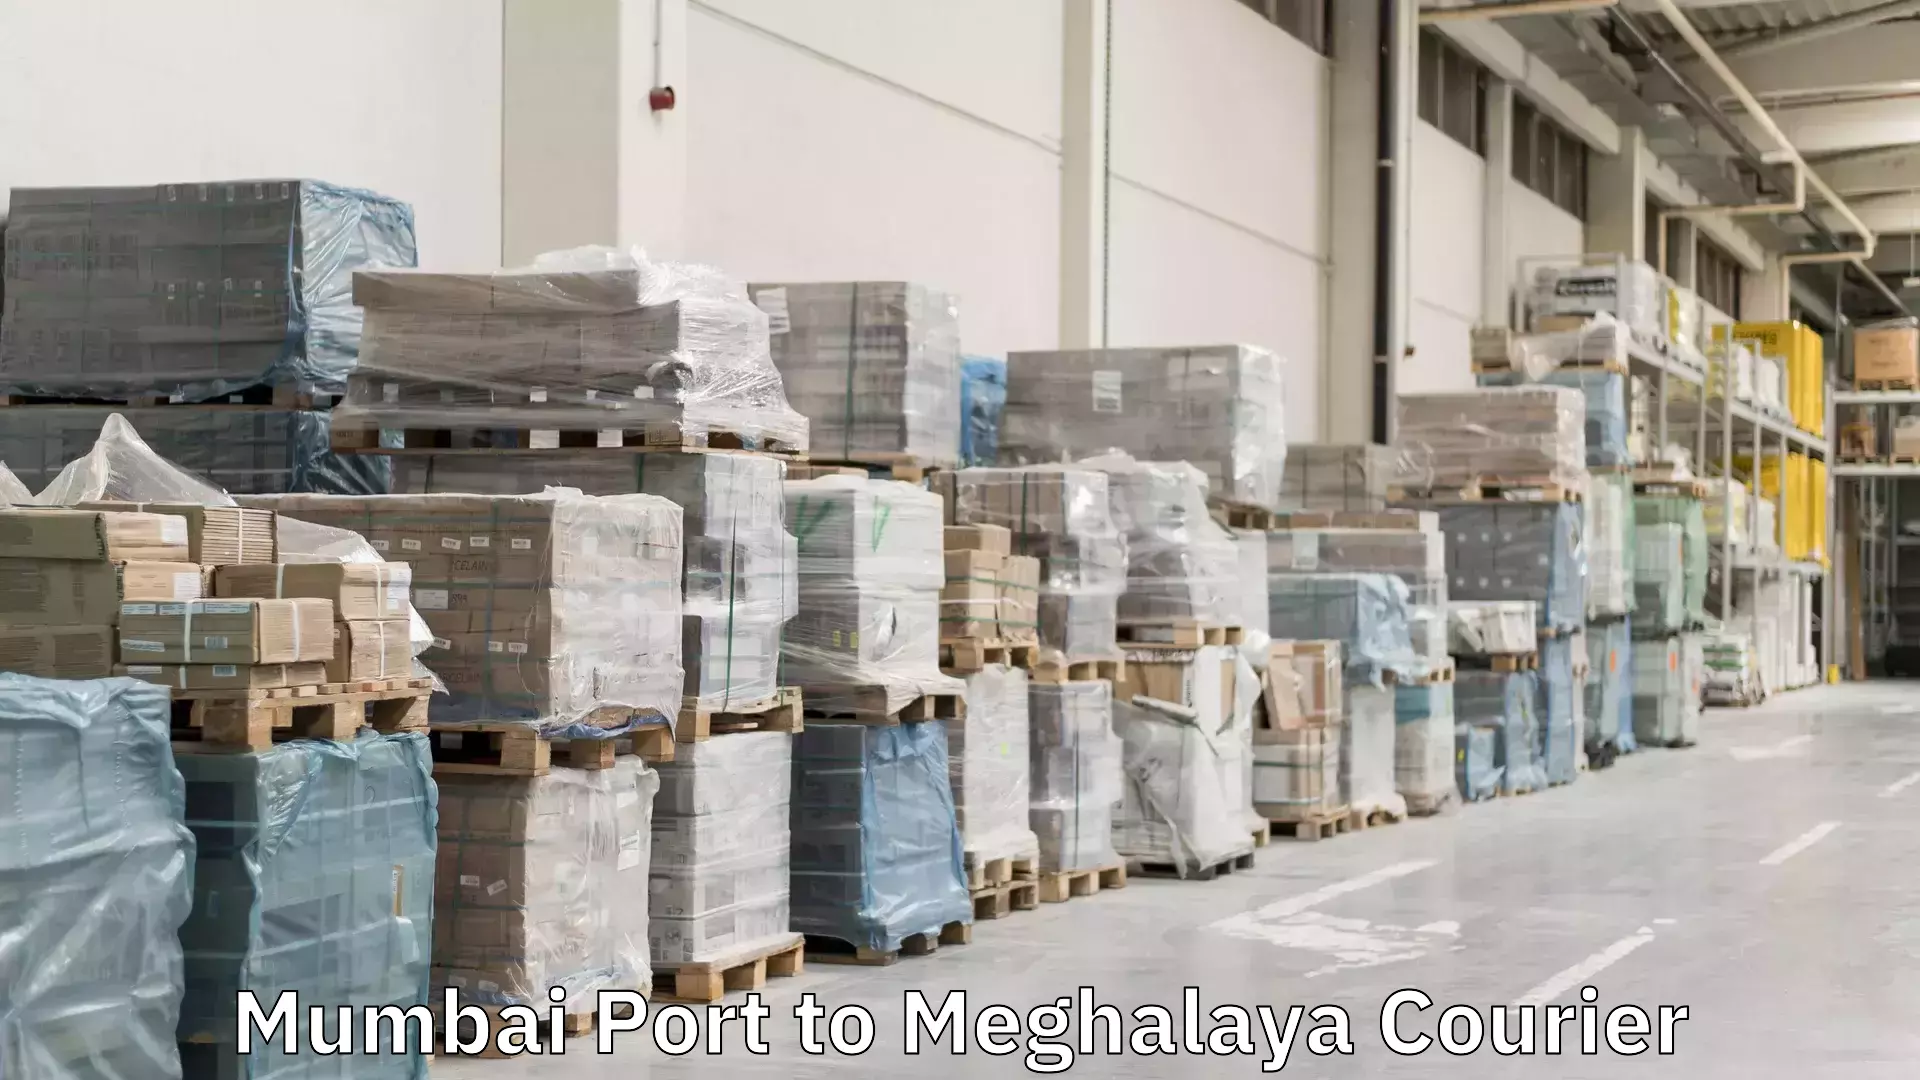 International parcel service Mumbai Port to Dkhiah West